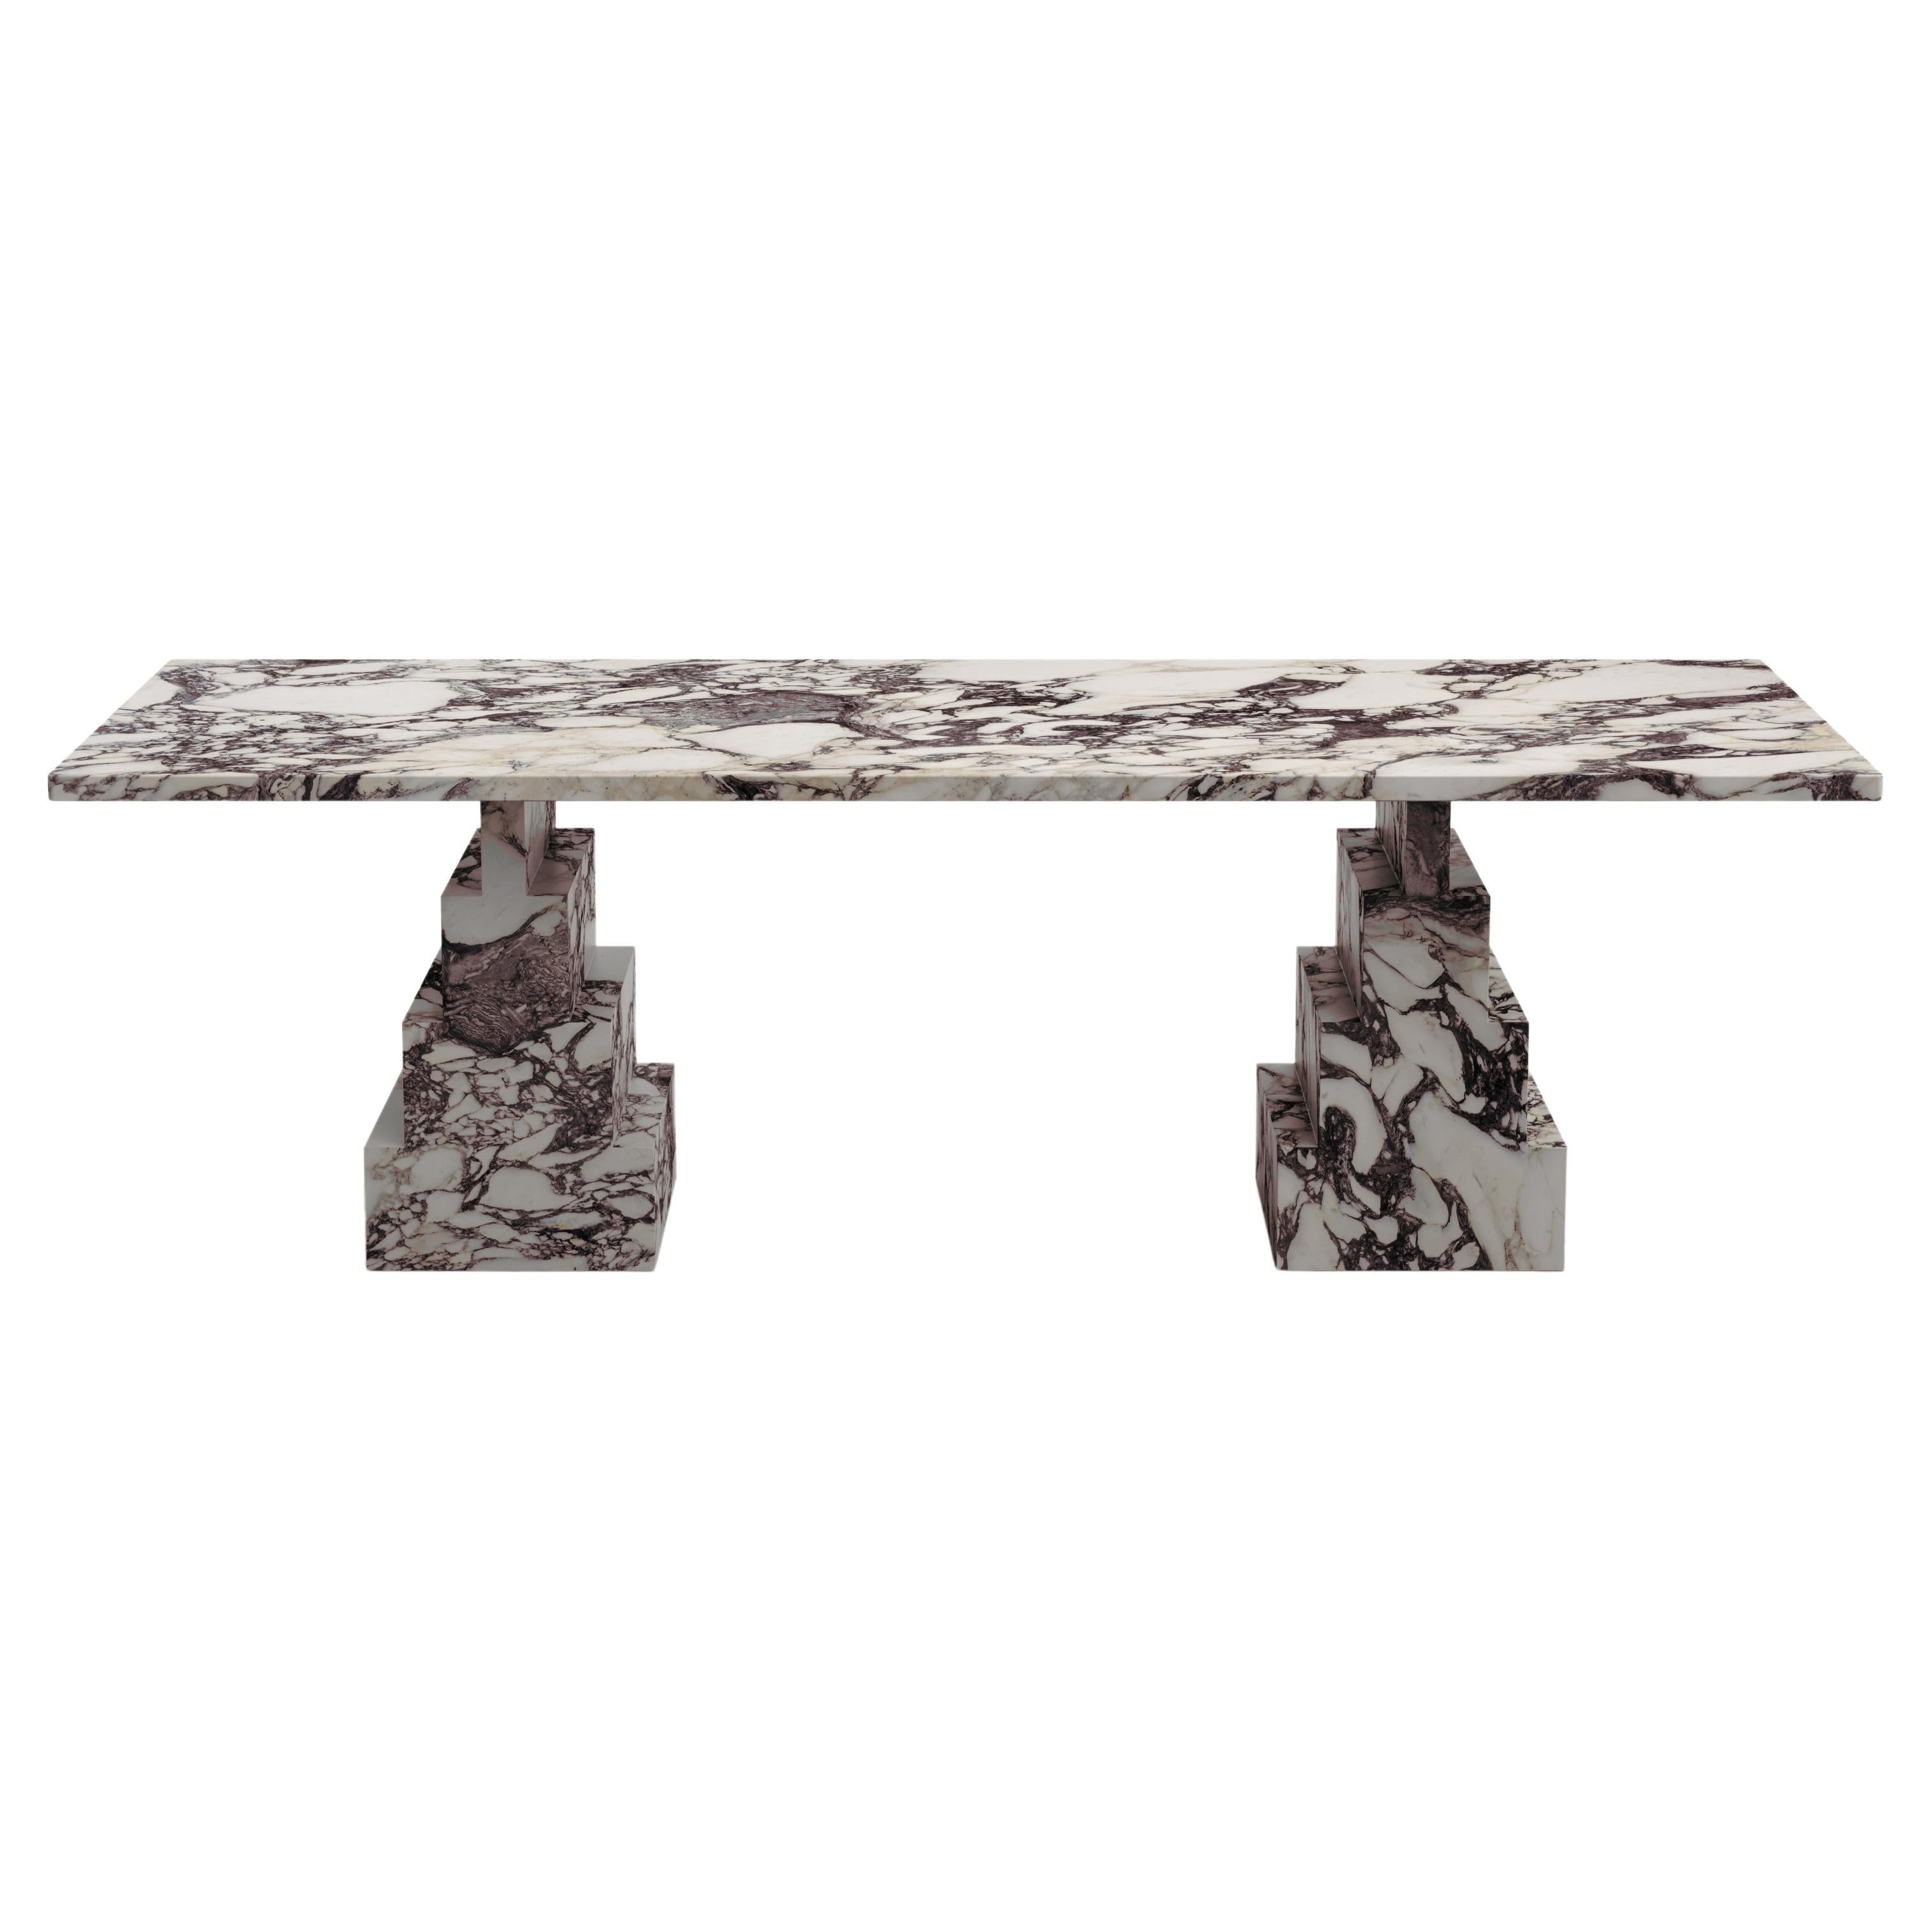 NORDST NIKO Dining Table, Italian Calacatta Marble, Danish Modern Design, New For Sale